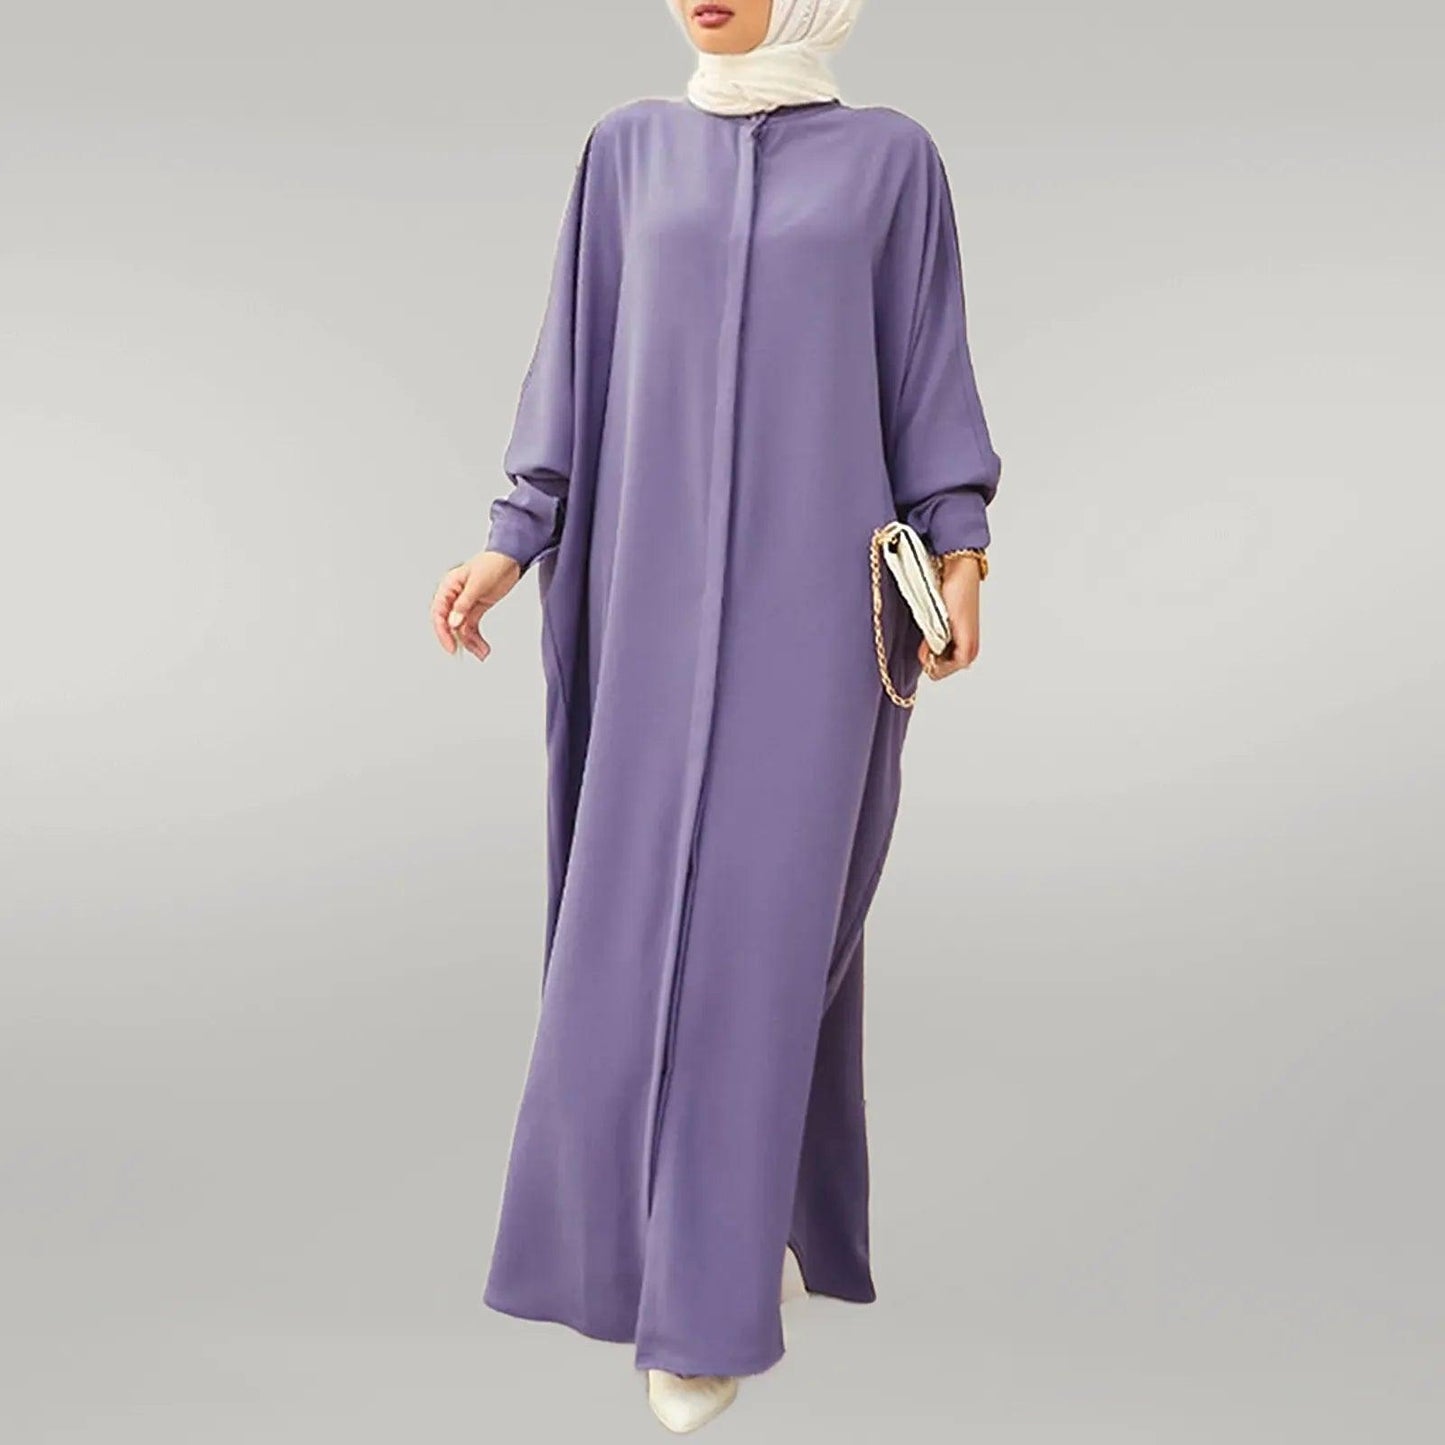 Loose Fit Free Size Comfortable Abaya